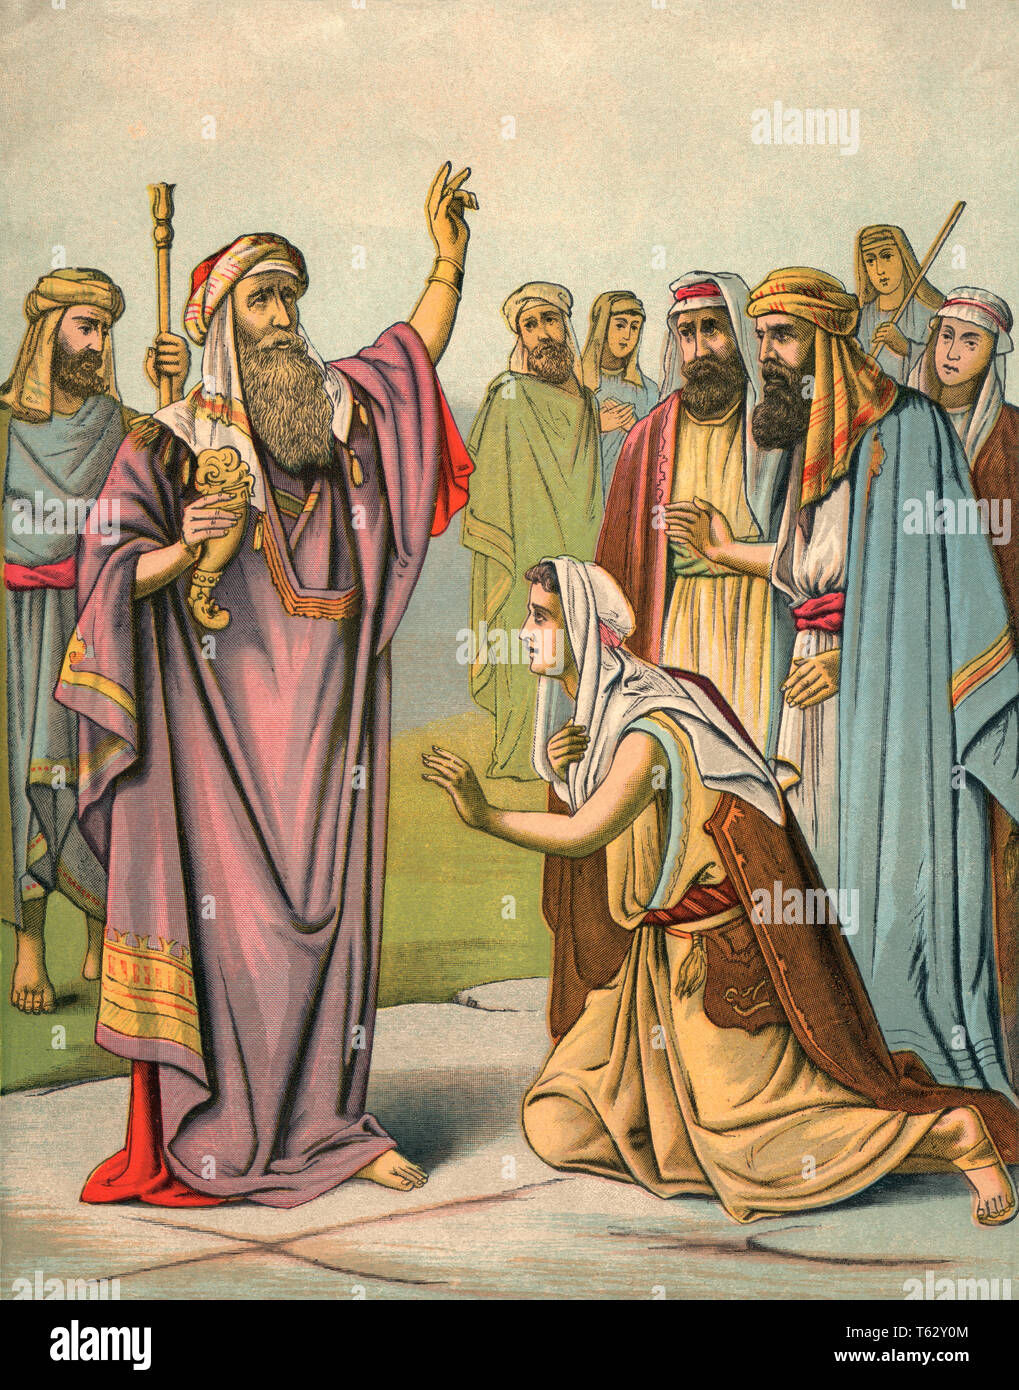 Samuel unge a david como rey